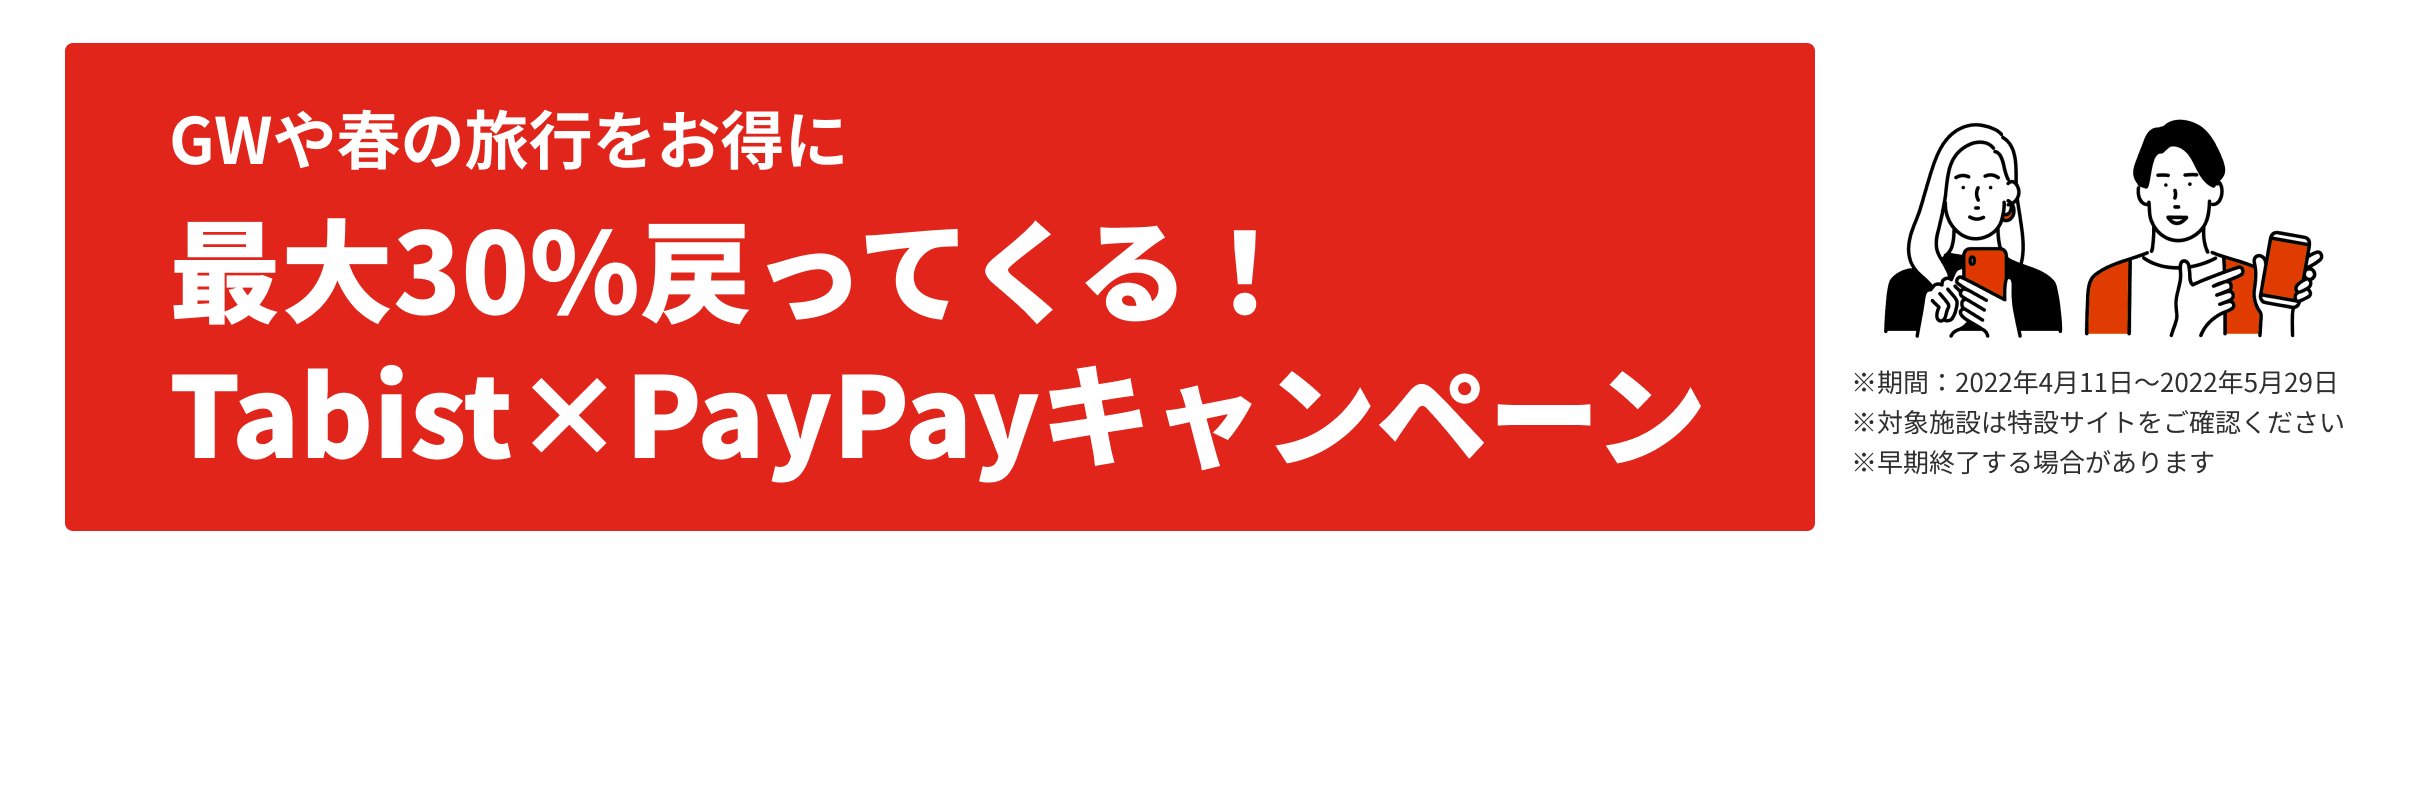 PayPay desktop banner.png